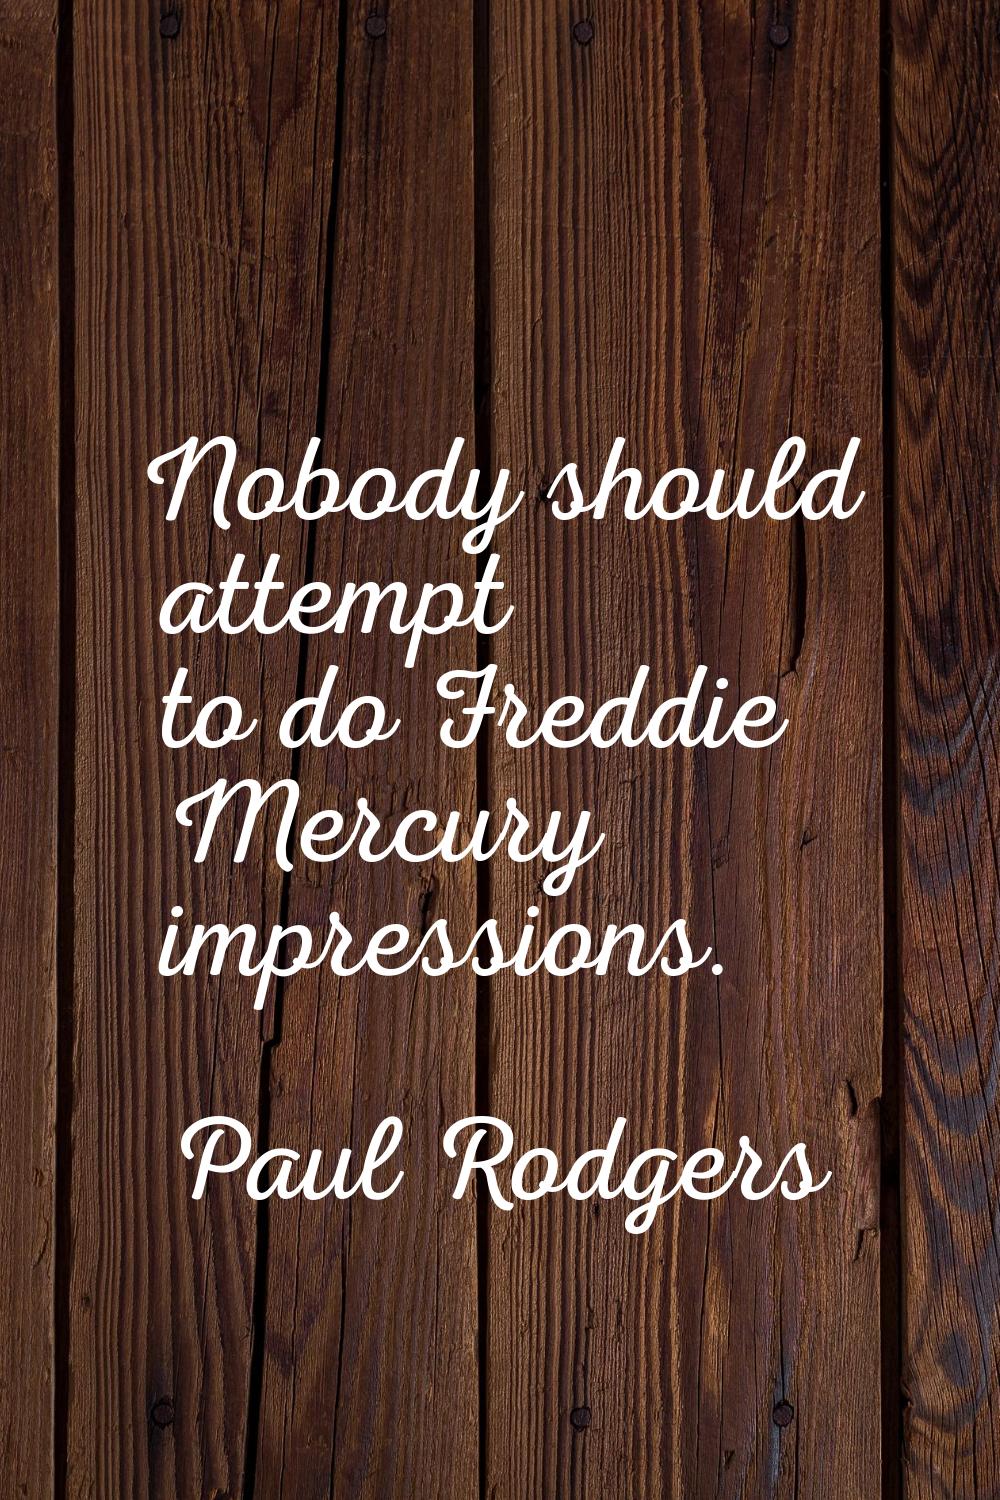 Nobody should attempt to do Freddie Mercury impressions.